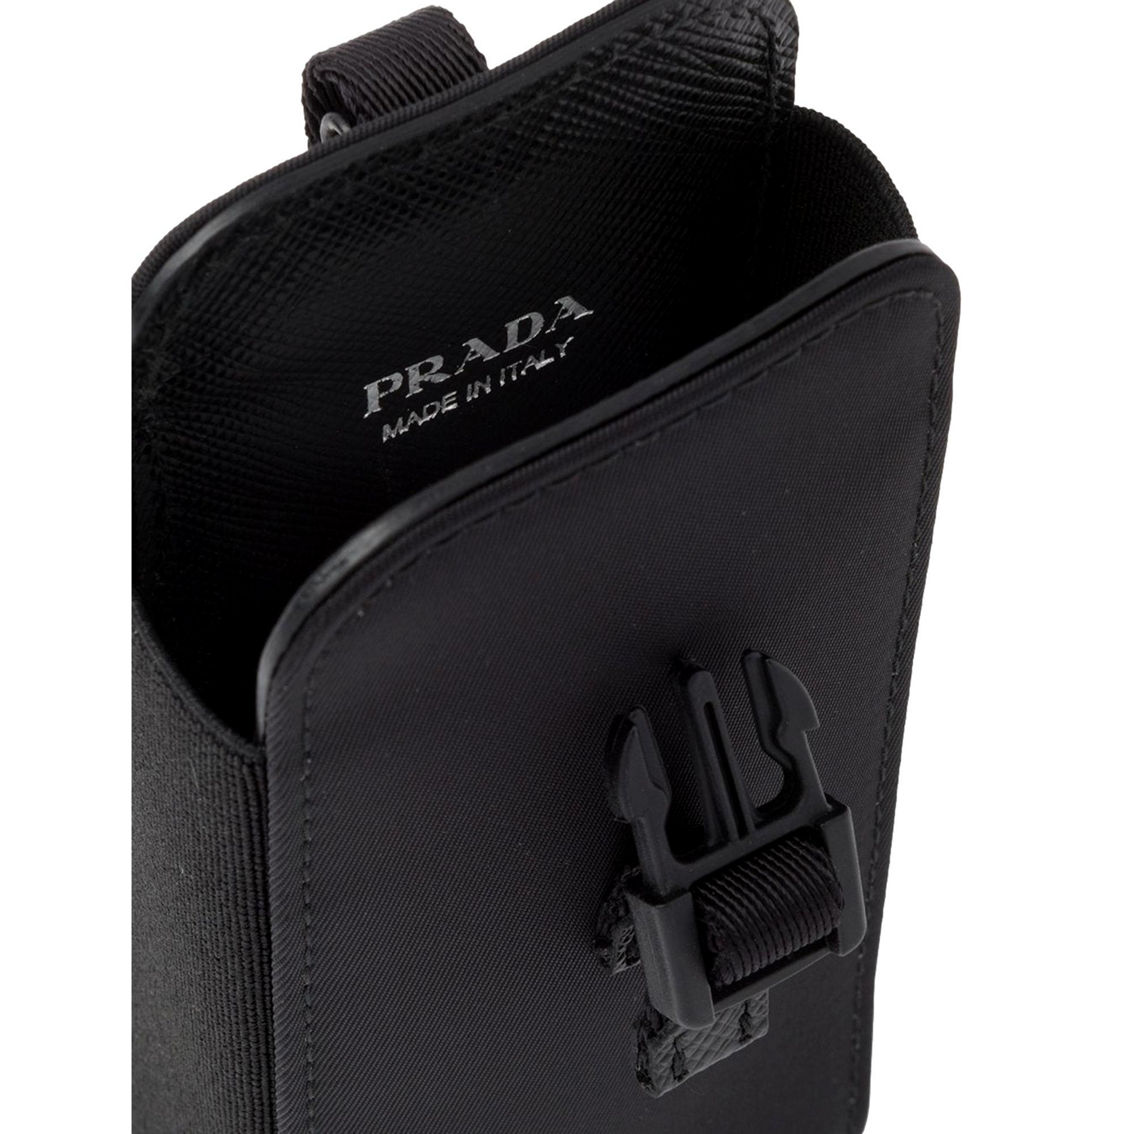 Prada Re-Nylon Black Lanyard Smartphone Holder Case Pouch Bag (New) - Image 2 of 5